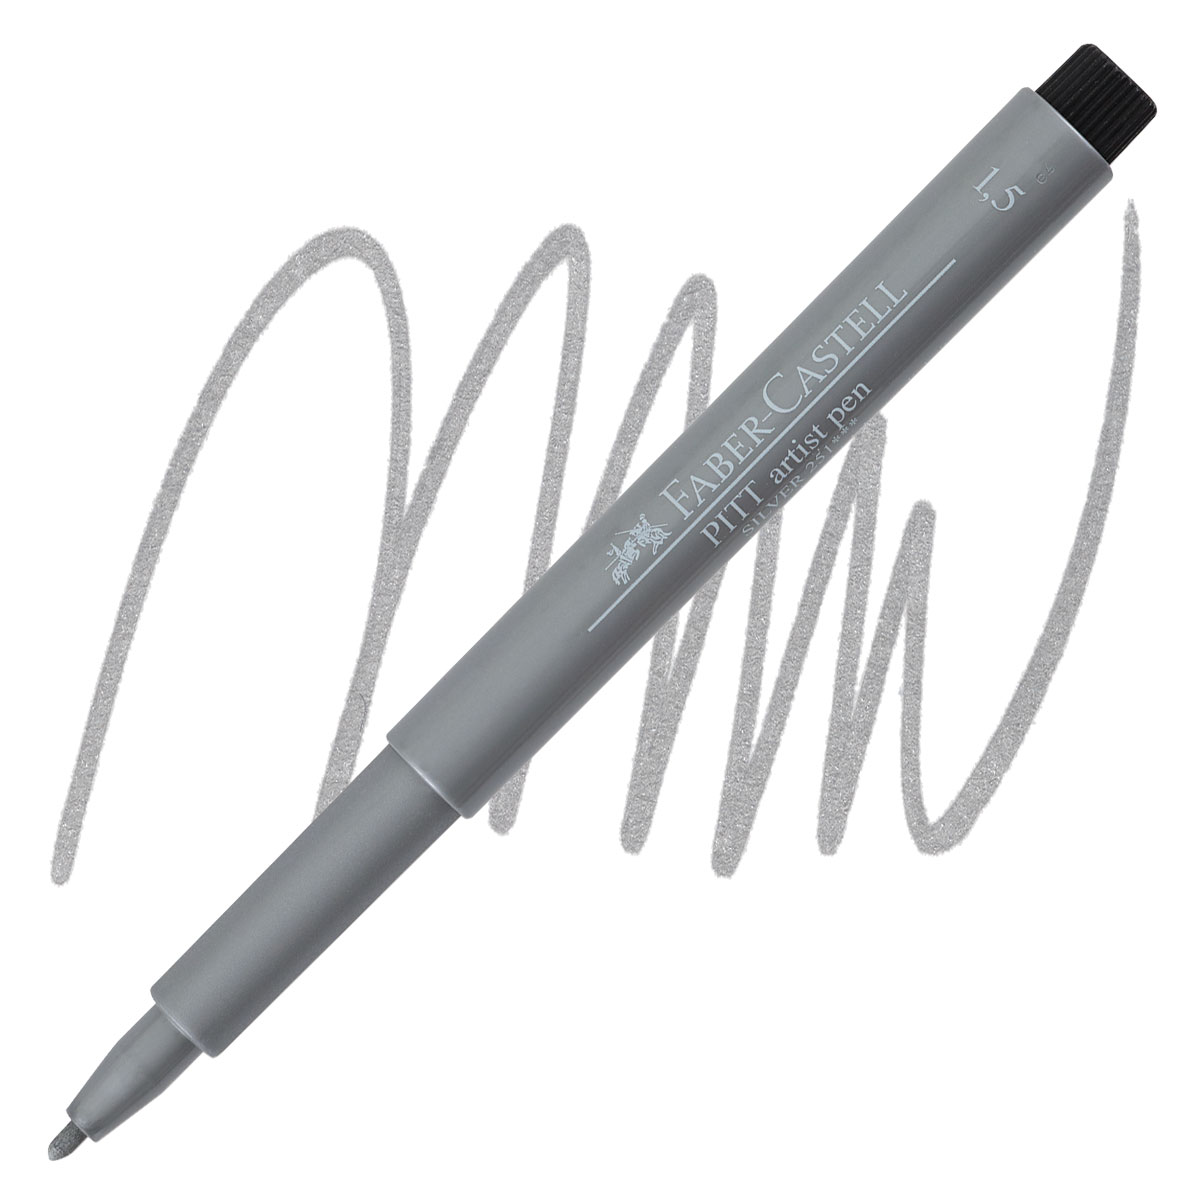 Pitt Artist Pen Metallic 1.5 India ink pen, silver